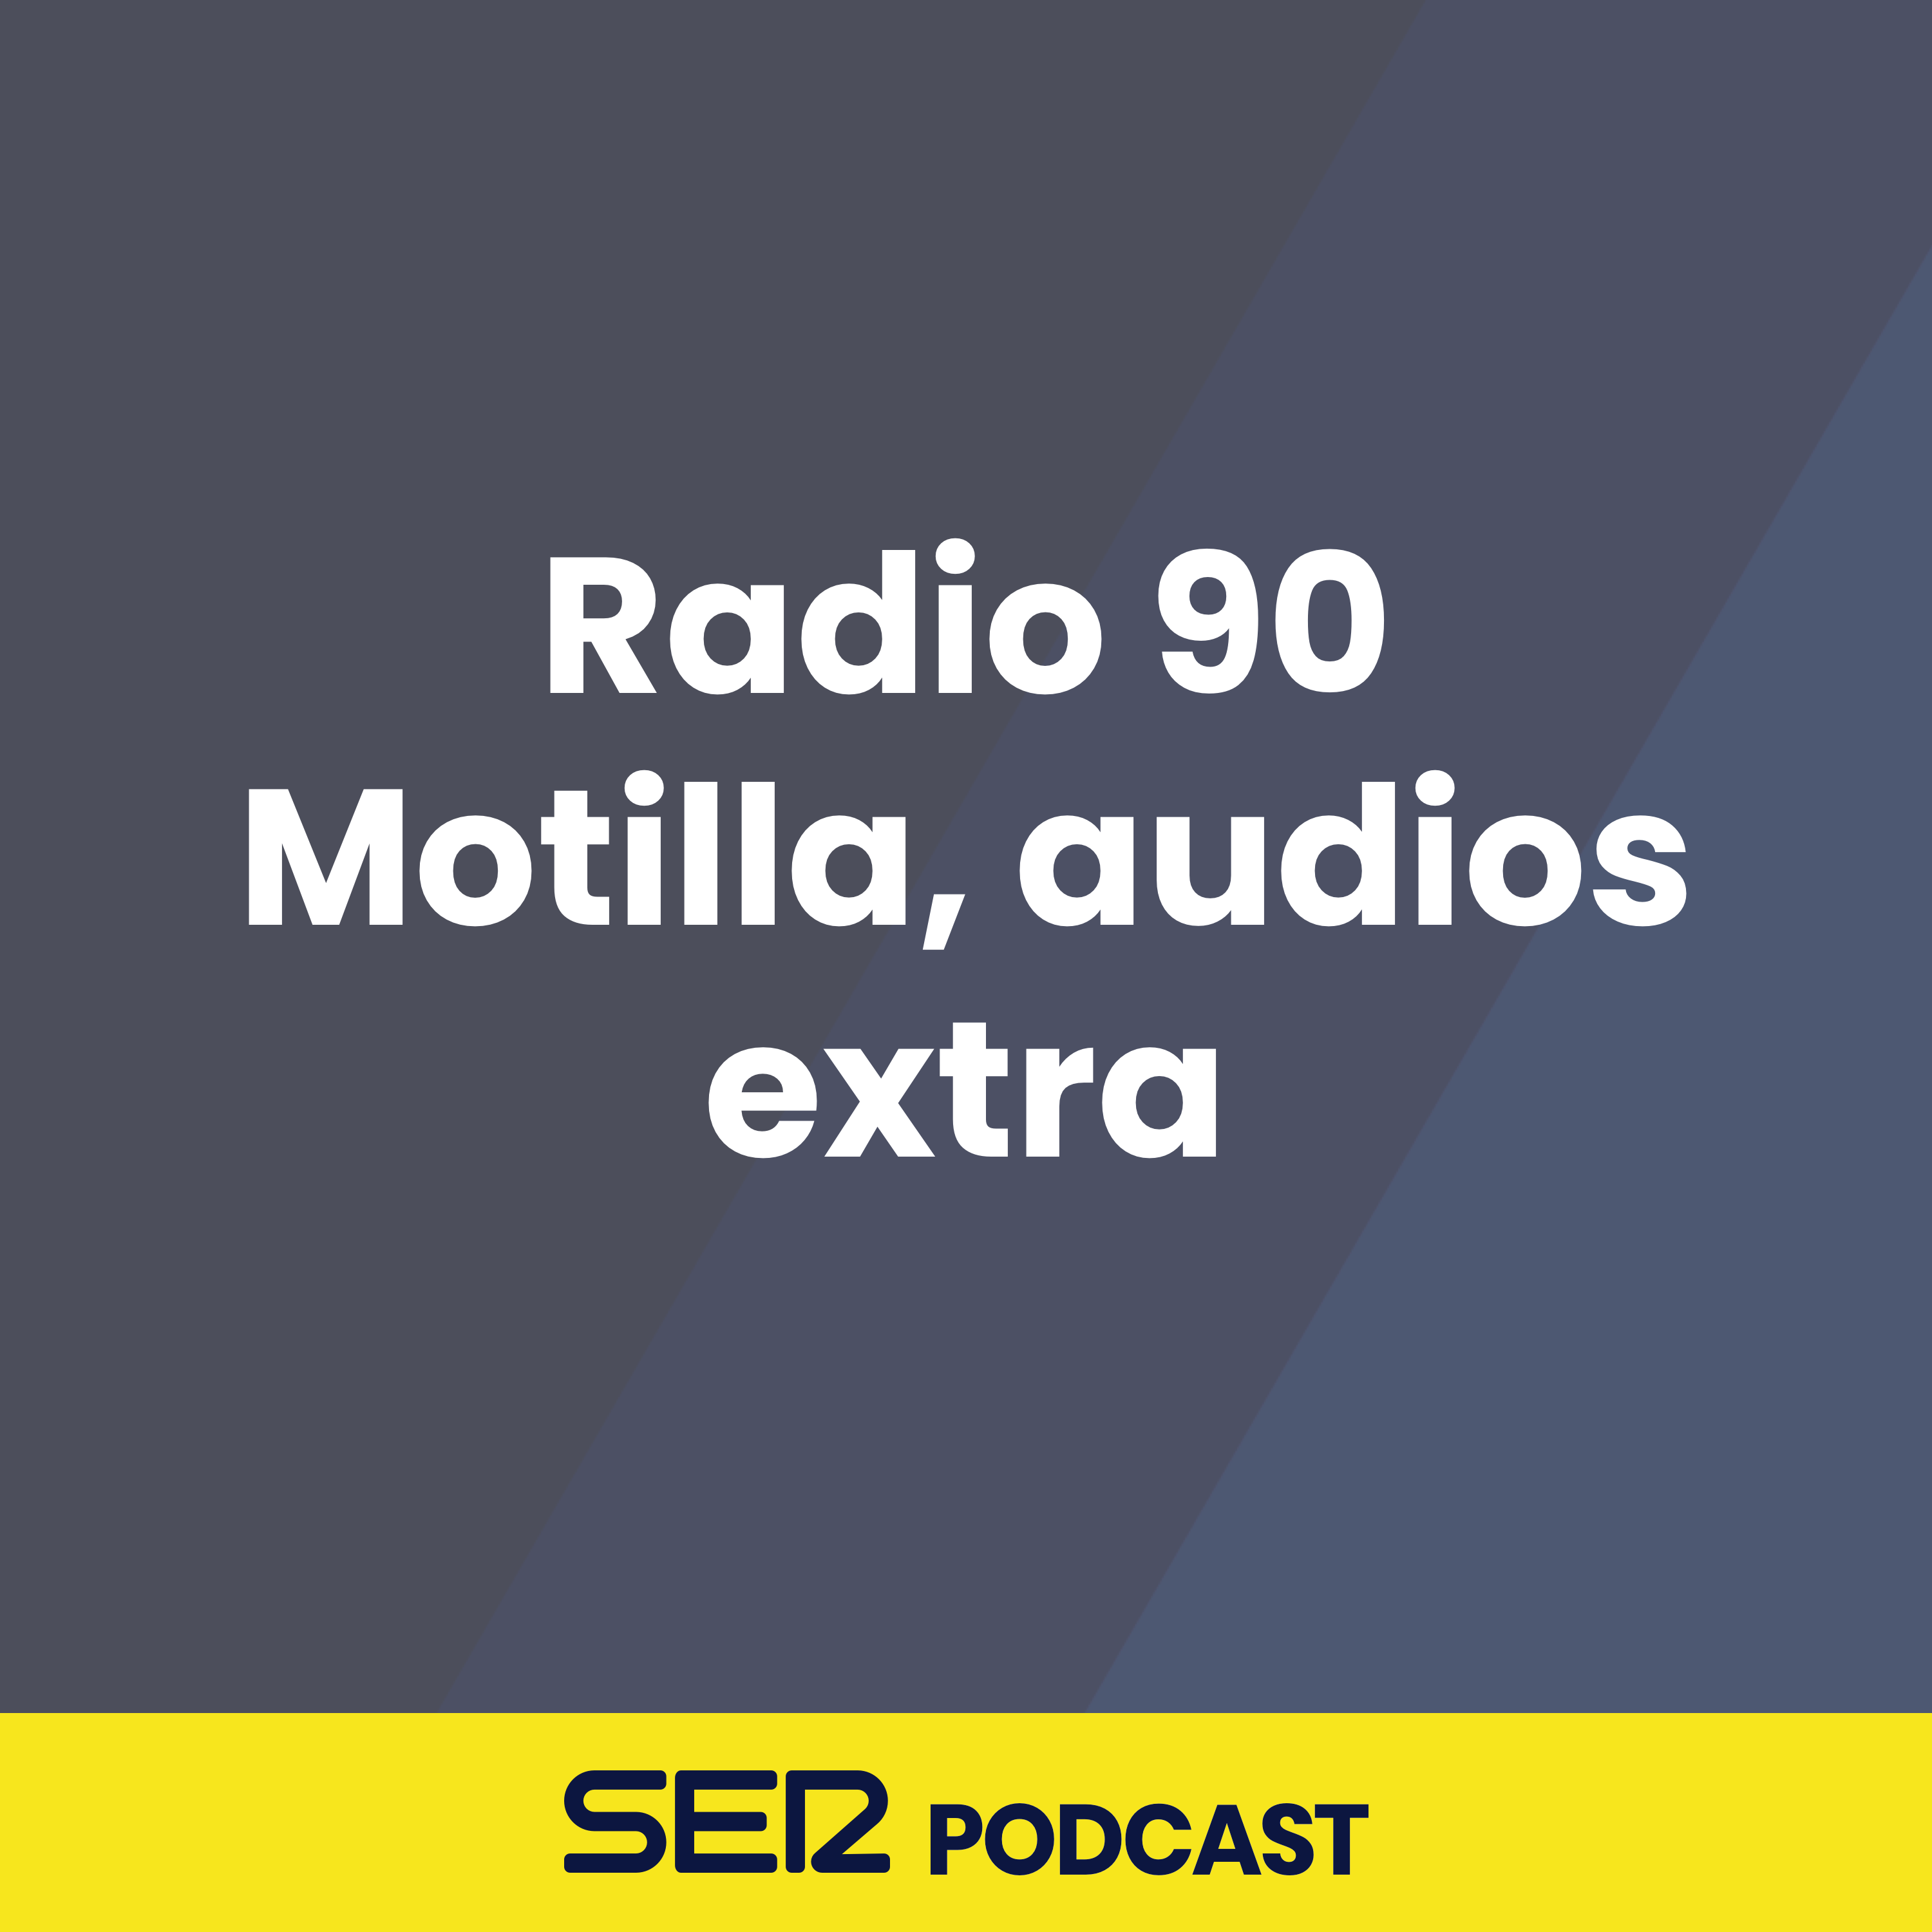 Radio 90 Motilla, audios extra